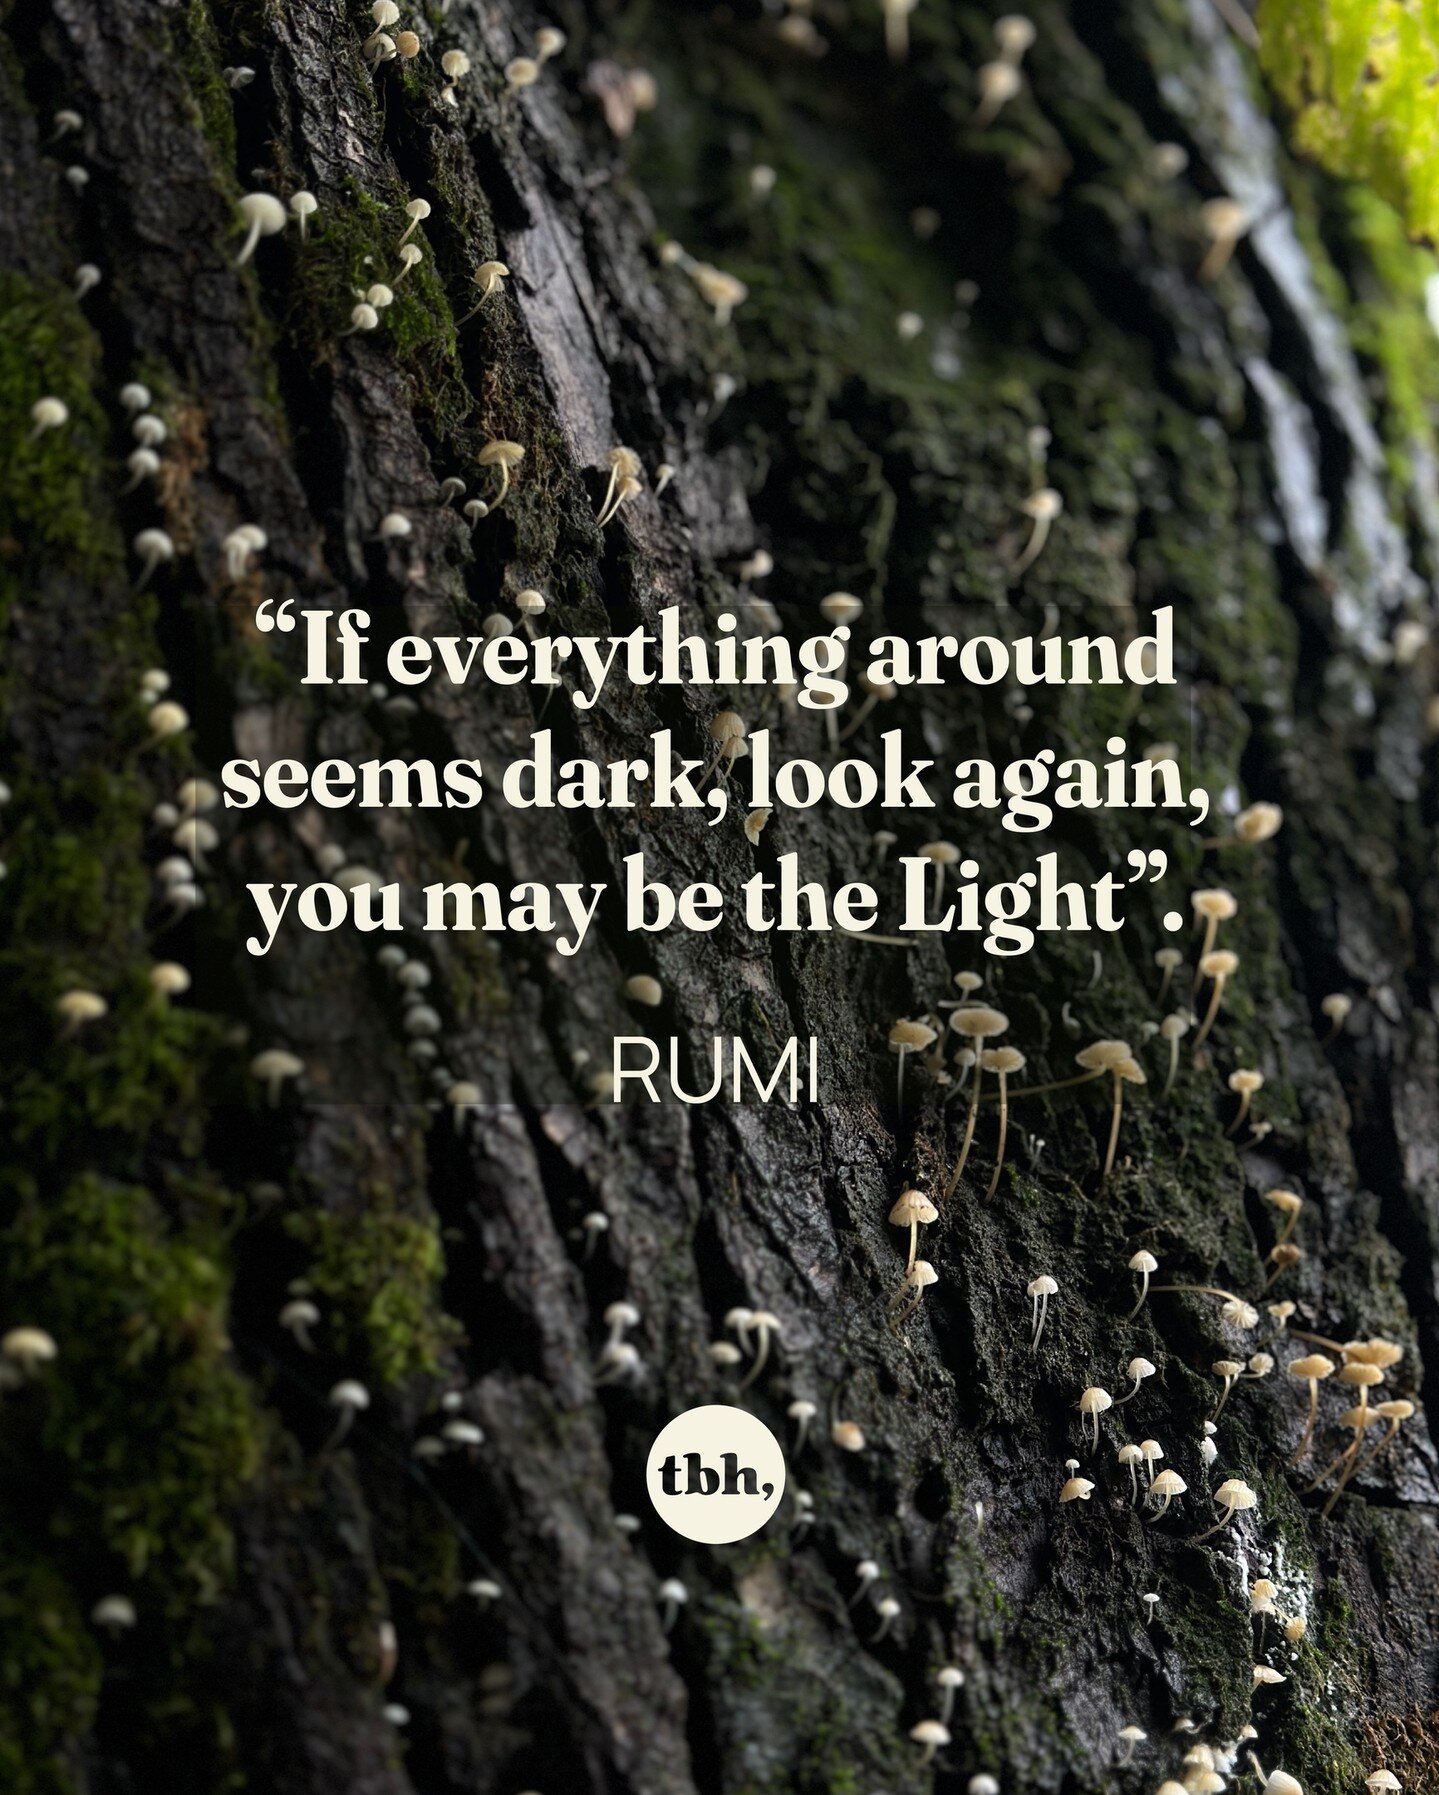 May you shine bright ✨⁠
⁠
Love, ⁠
⁠
Paula⁠
⁠
⁠
#rumi #rumiquotes #dark #light #lovewins